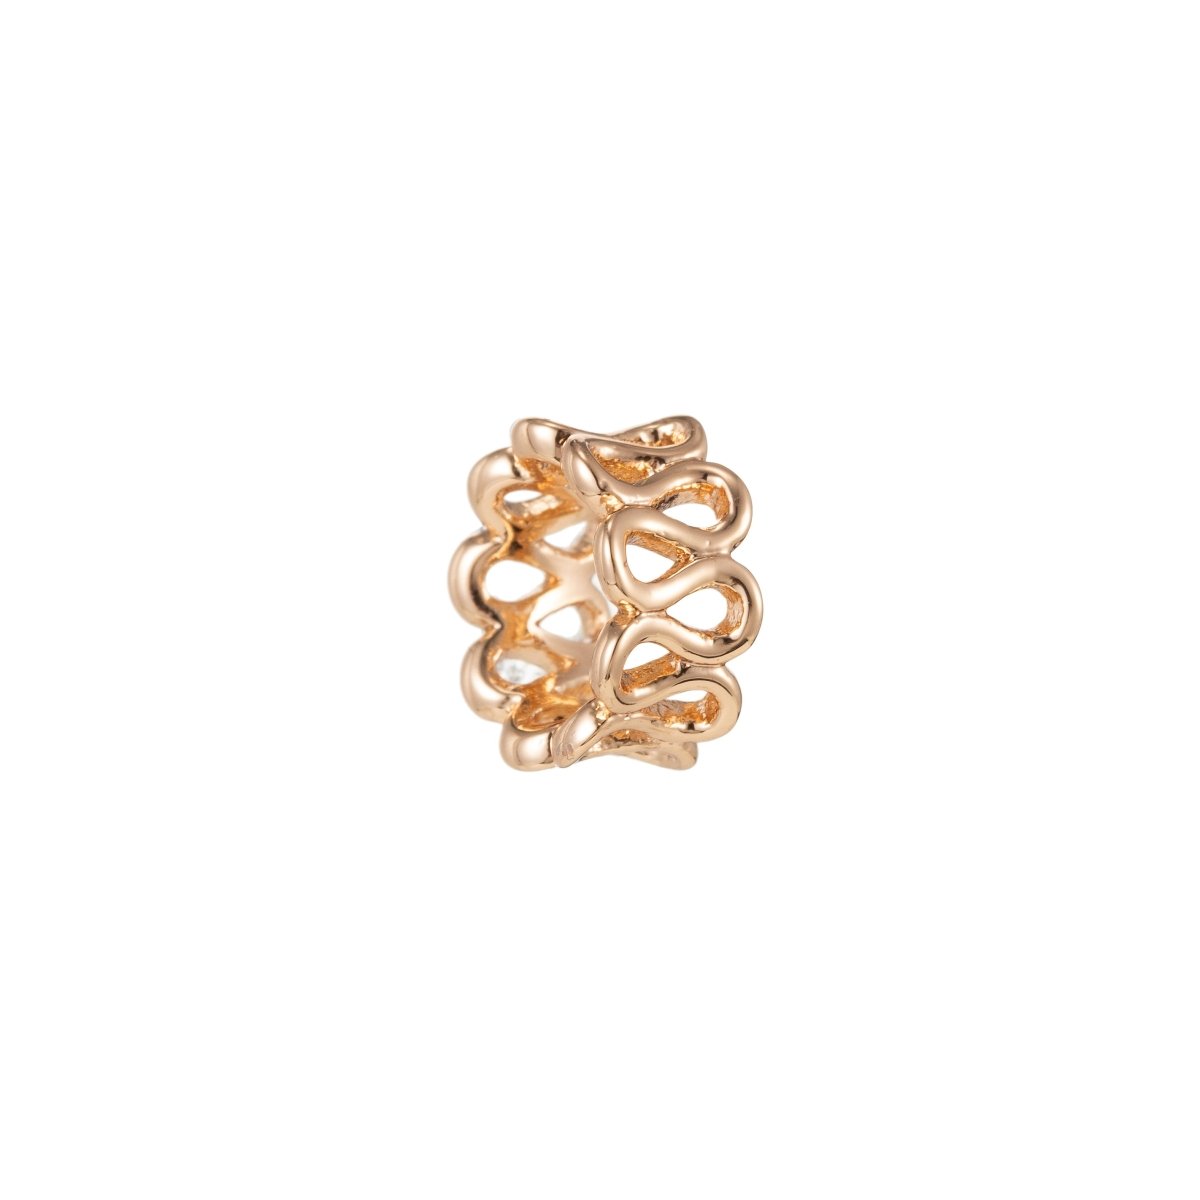 Mini Golden Spiral Beads Ball, Plain Gold Filled Geometric Wheel Jewelry Making Beads B-265 - DLUXCA